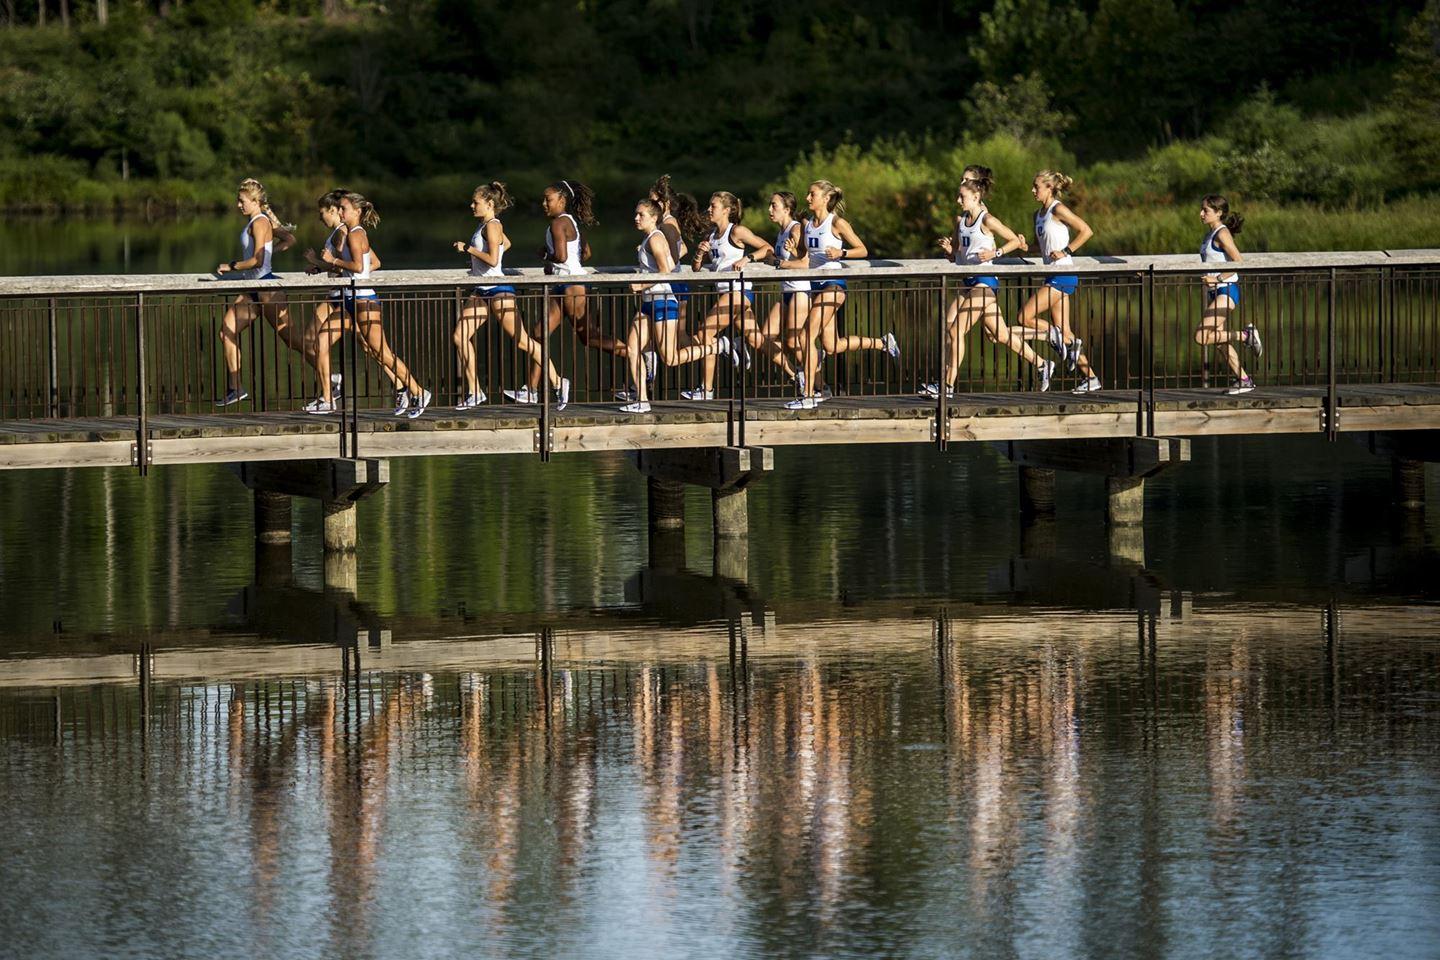 Duke runners on bridge reflected in water